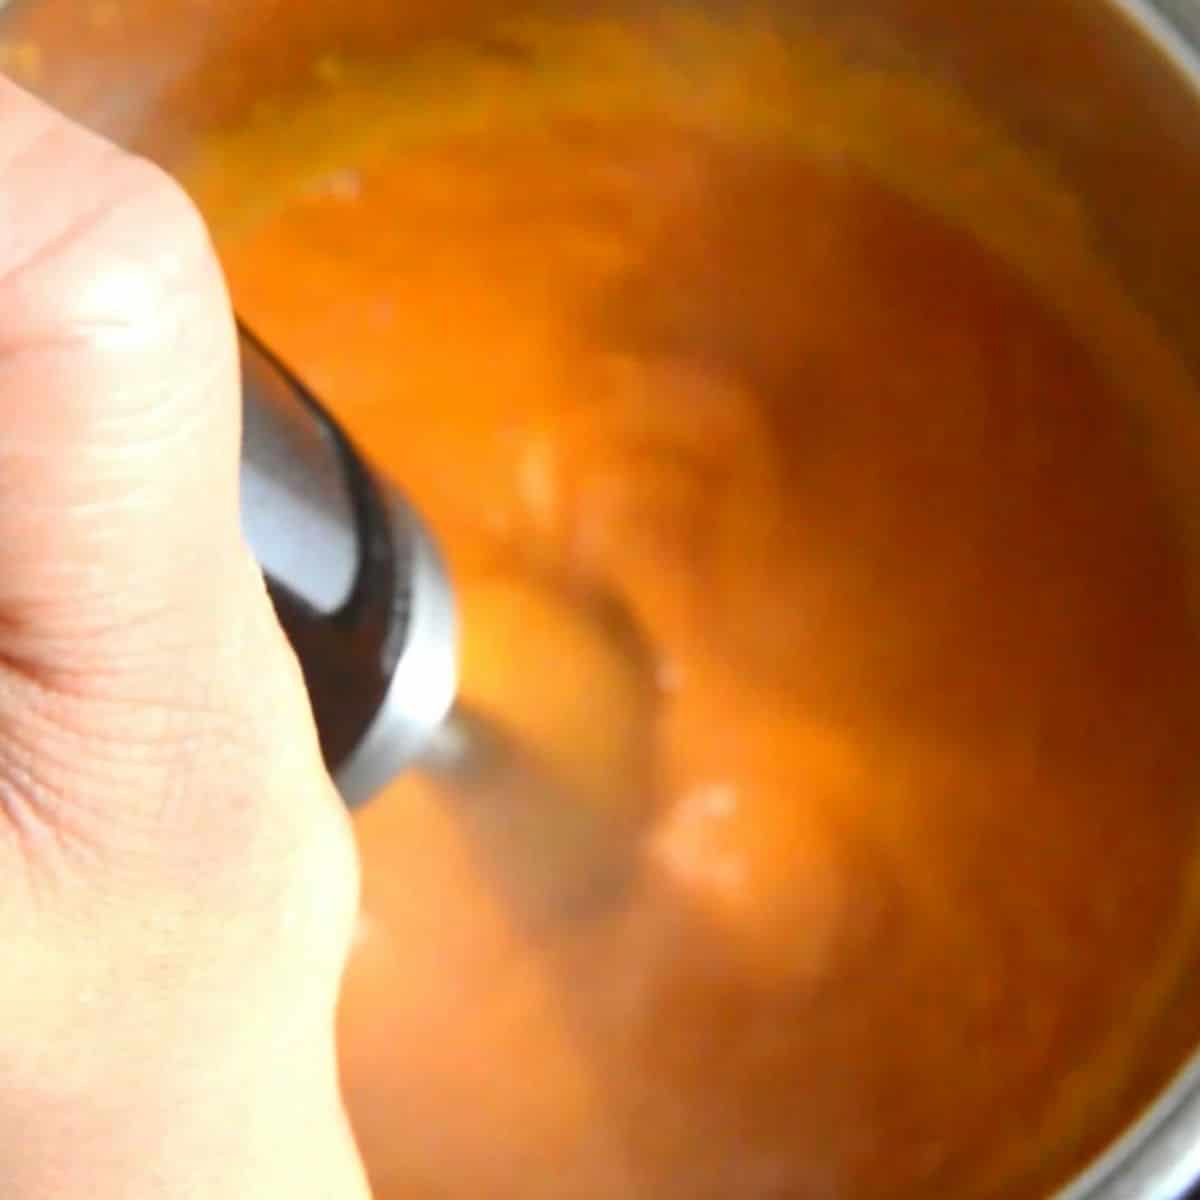 blending carrot lentil soup with an immersion blender.